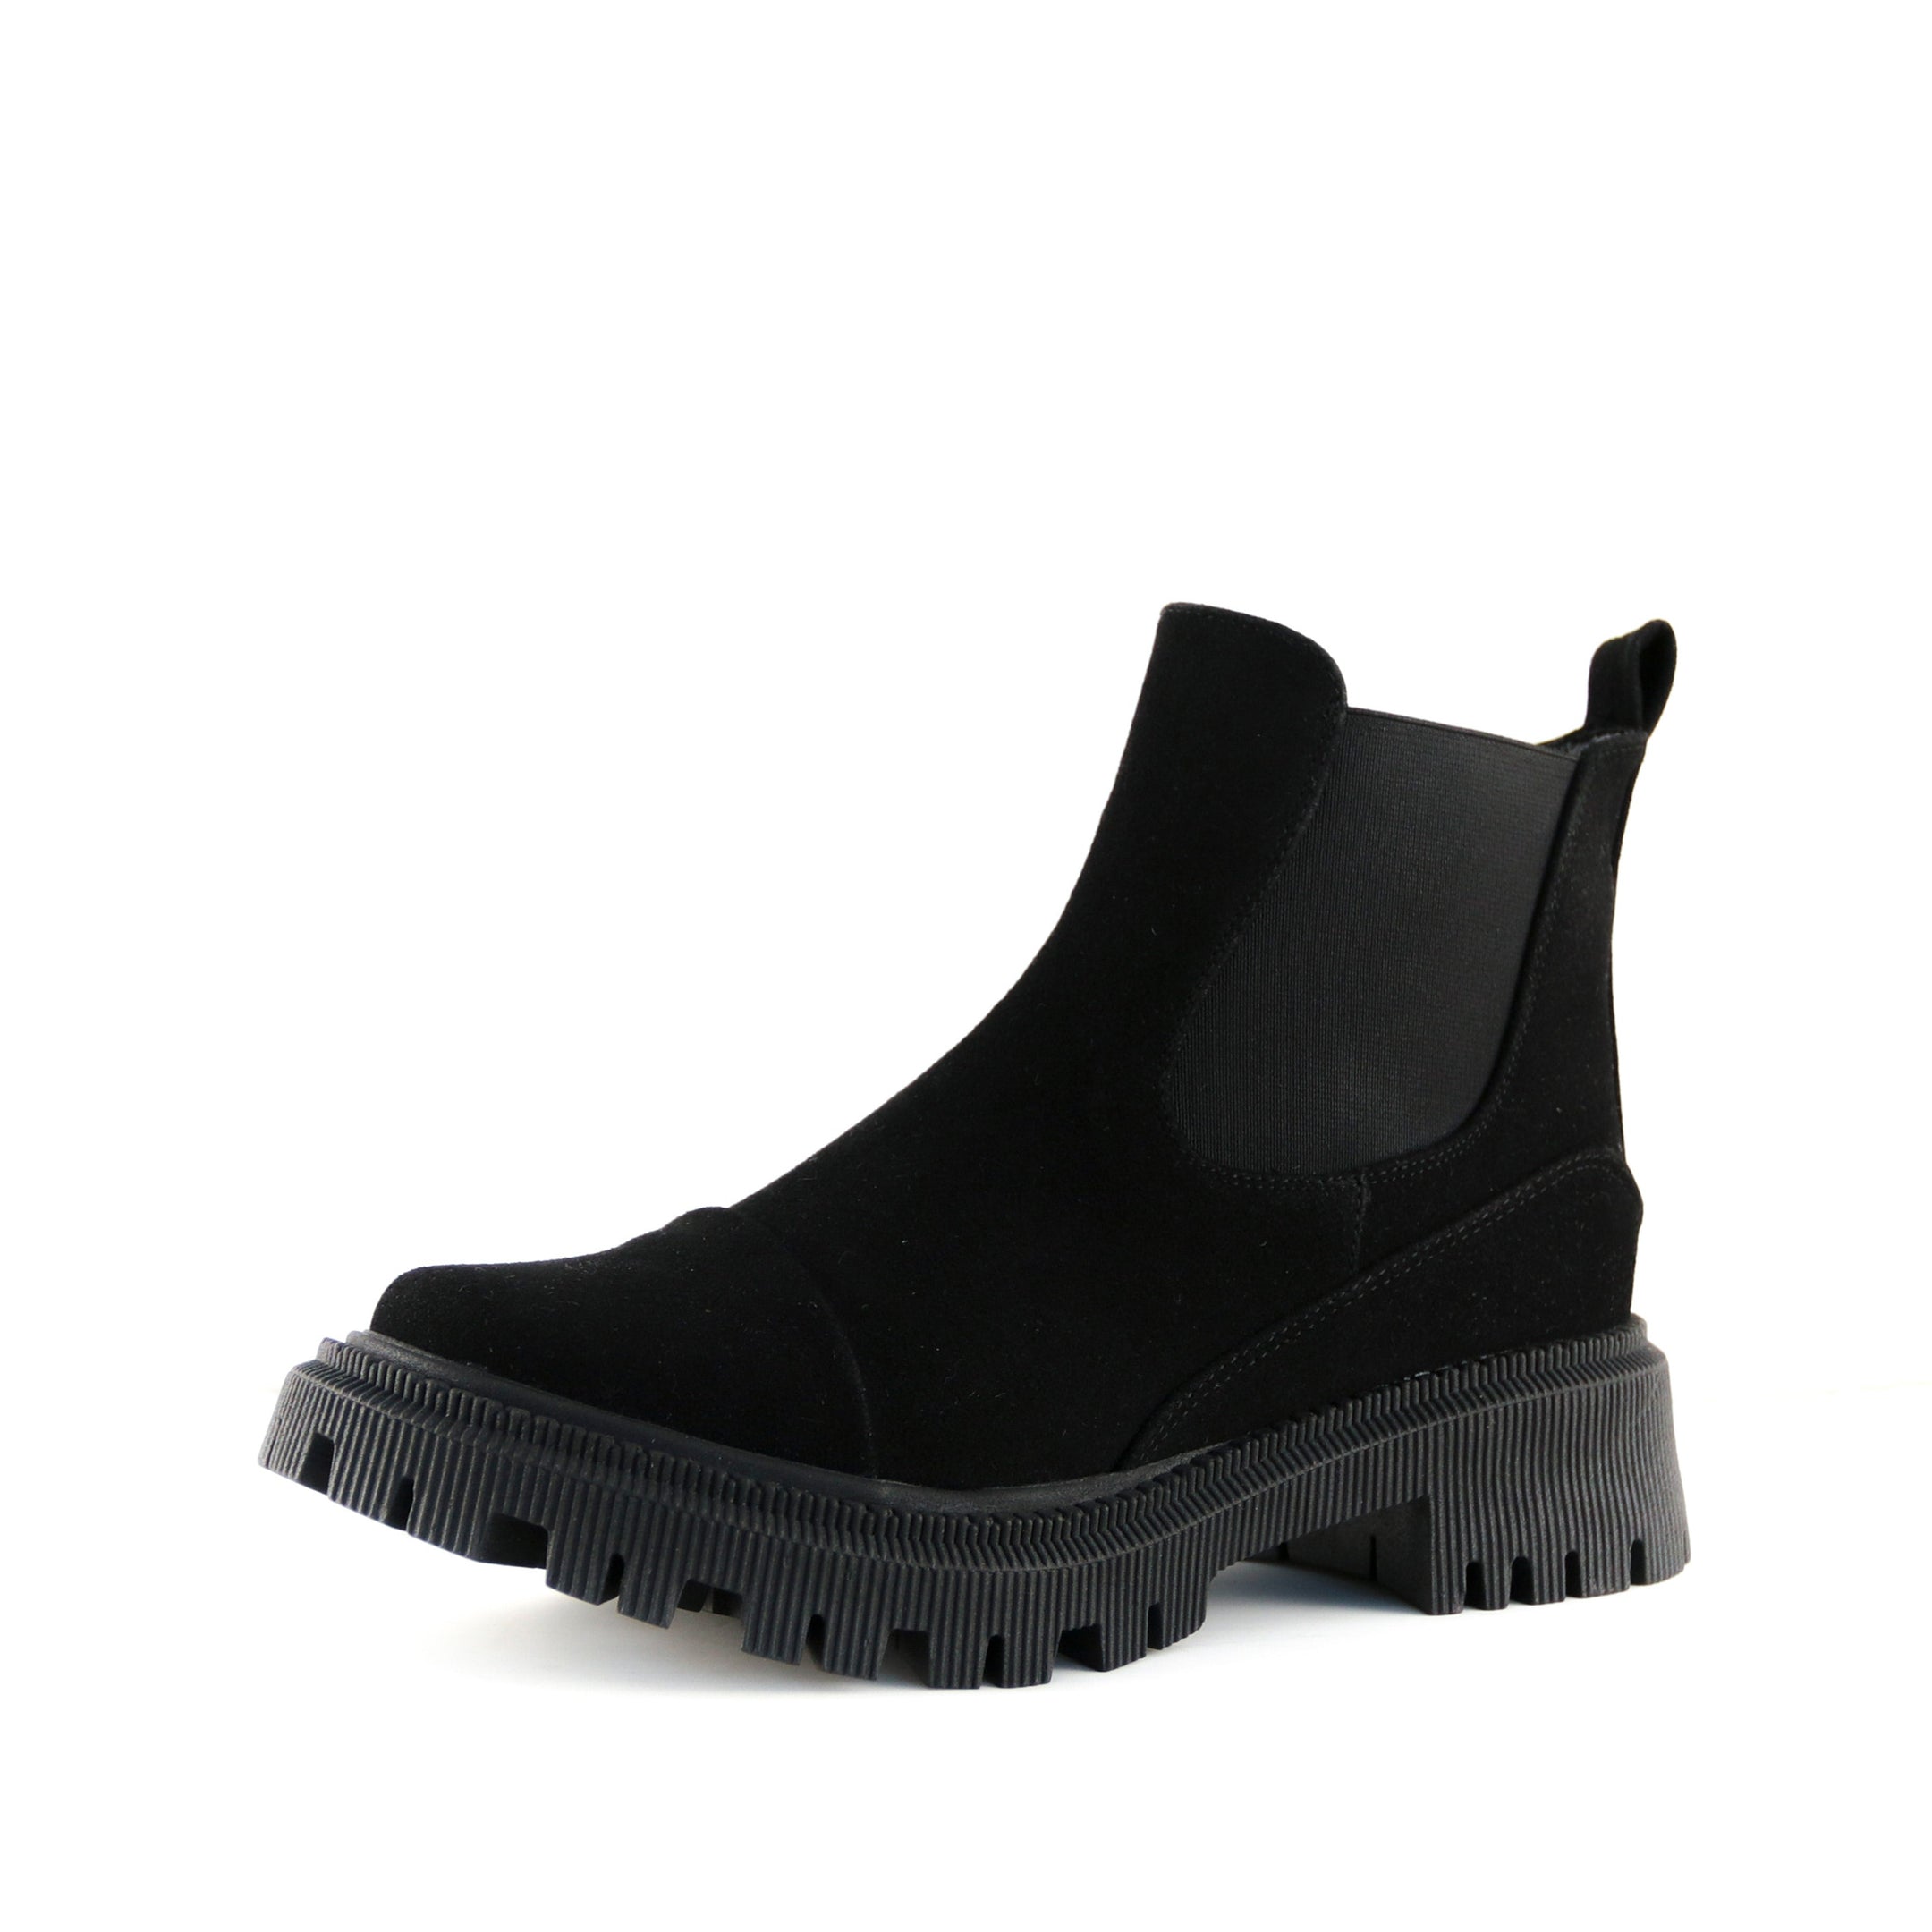 Buy Women's Twilight Chelsea Boots Black by Nest Shoes